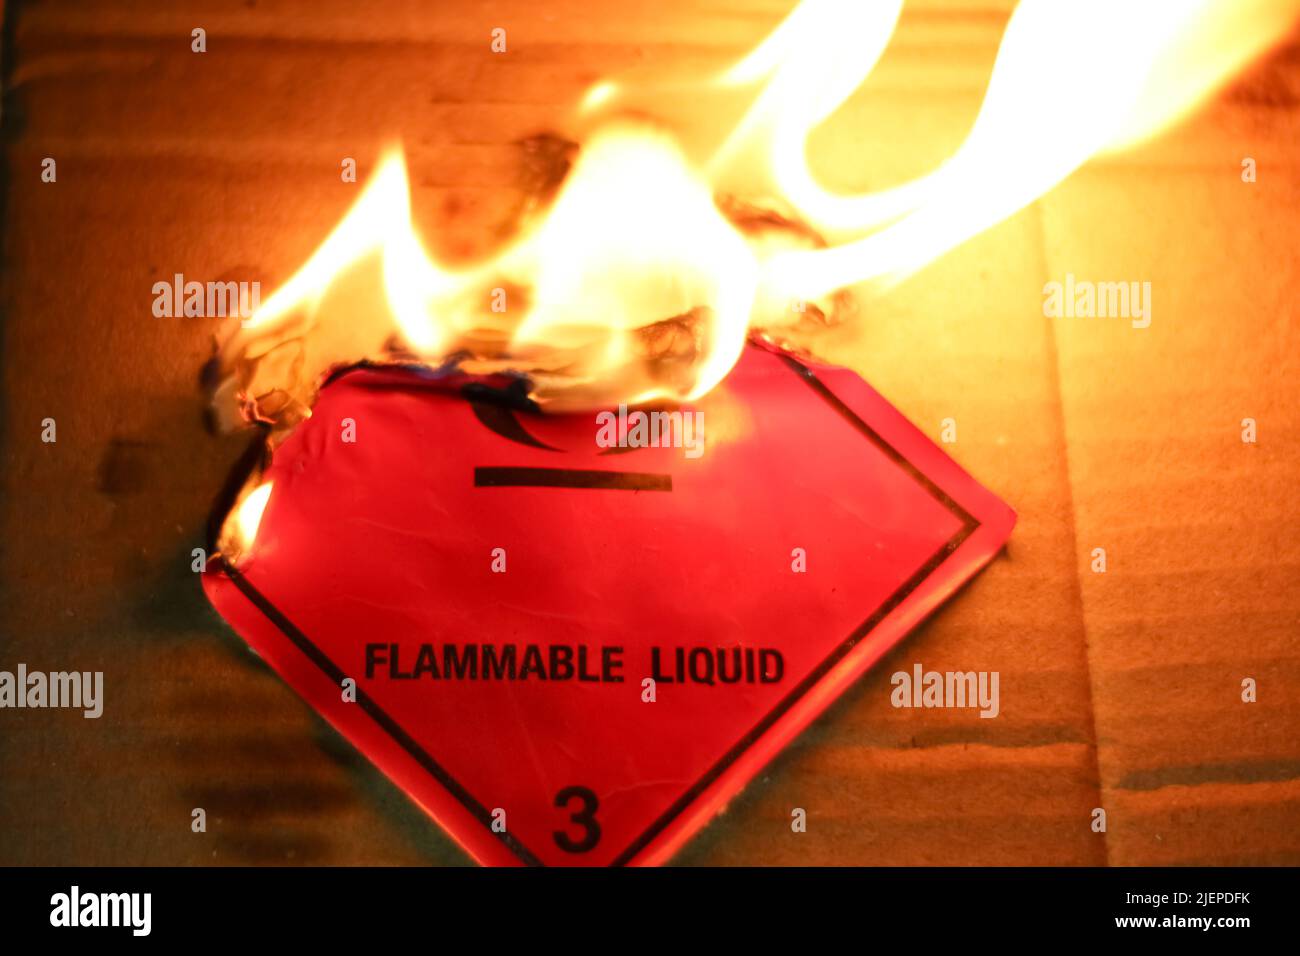 Flame is burning Flammable liquid symbol Stock Photo